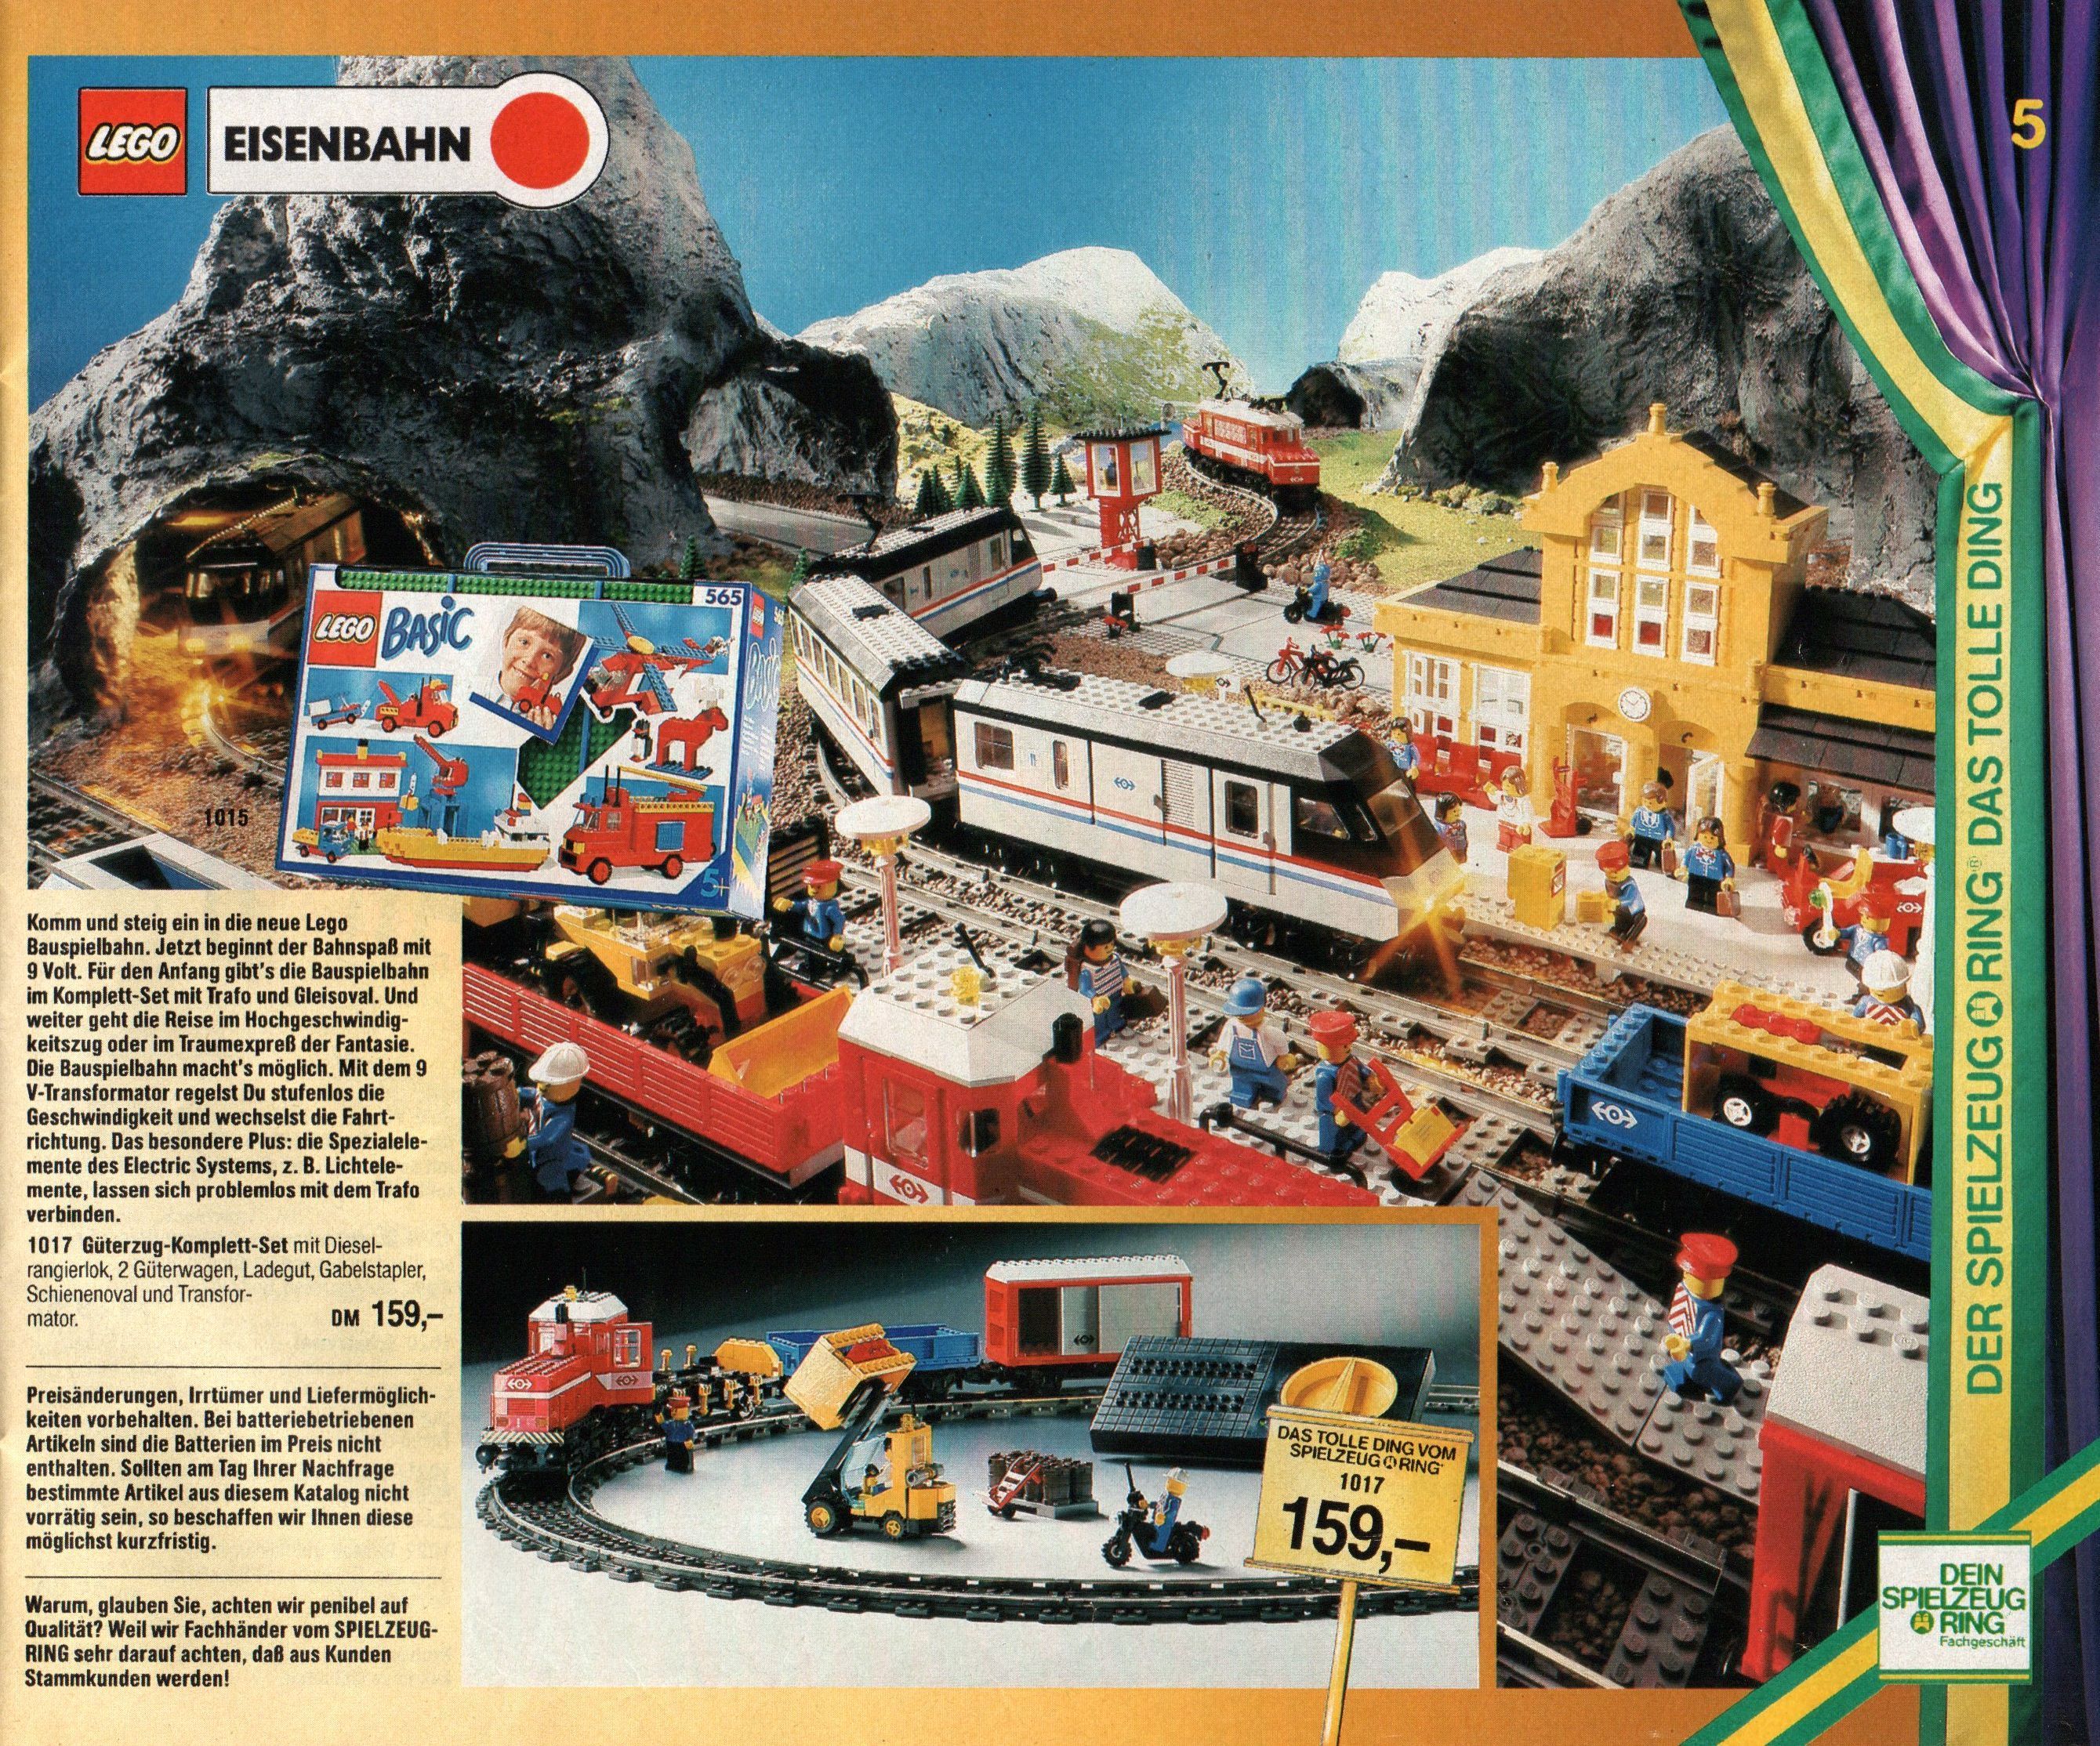 30 Jahre LEGO 9V-Eisenbahn: Metroliner (4558) im Classic-Review